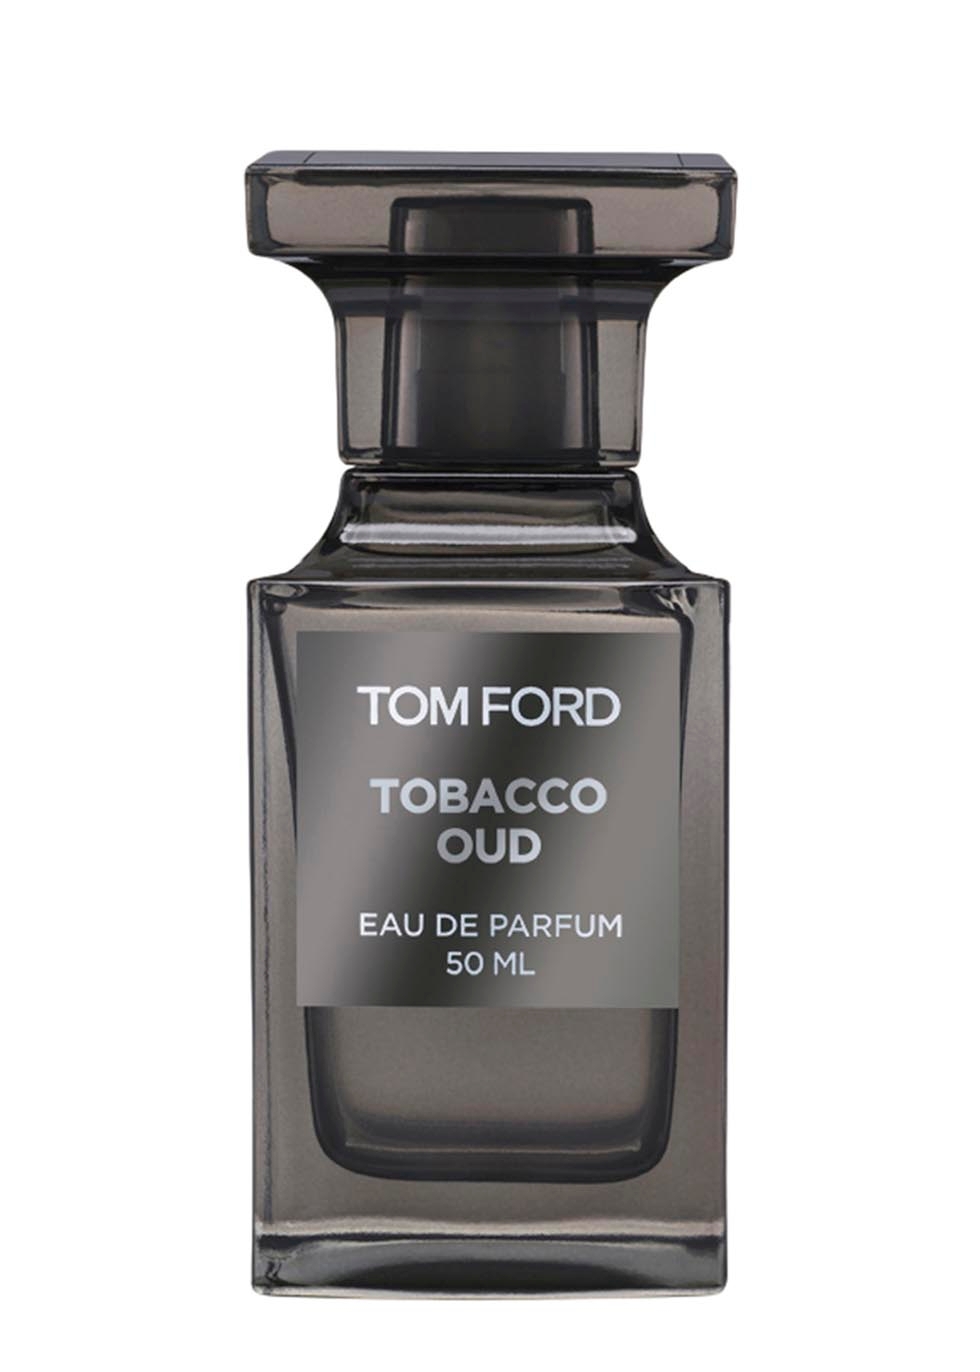 Tom Ford Tobacco Oud Eau De Parfum 50ml - Harvey Nichols